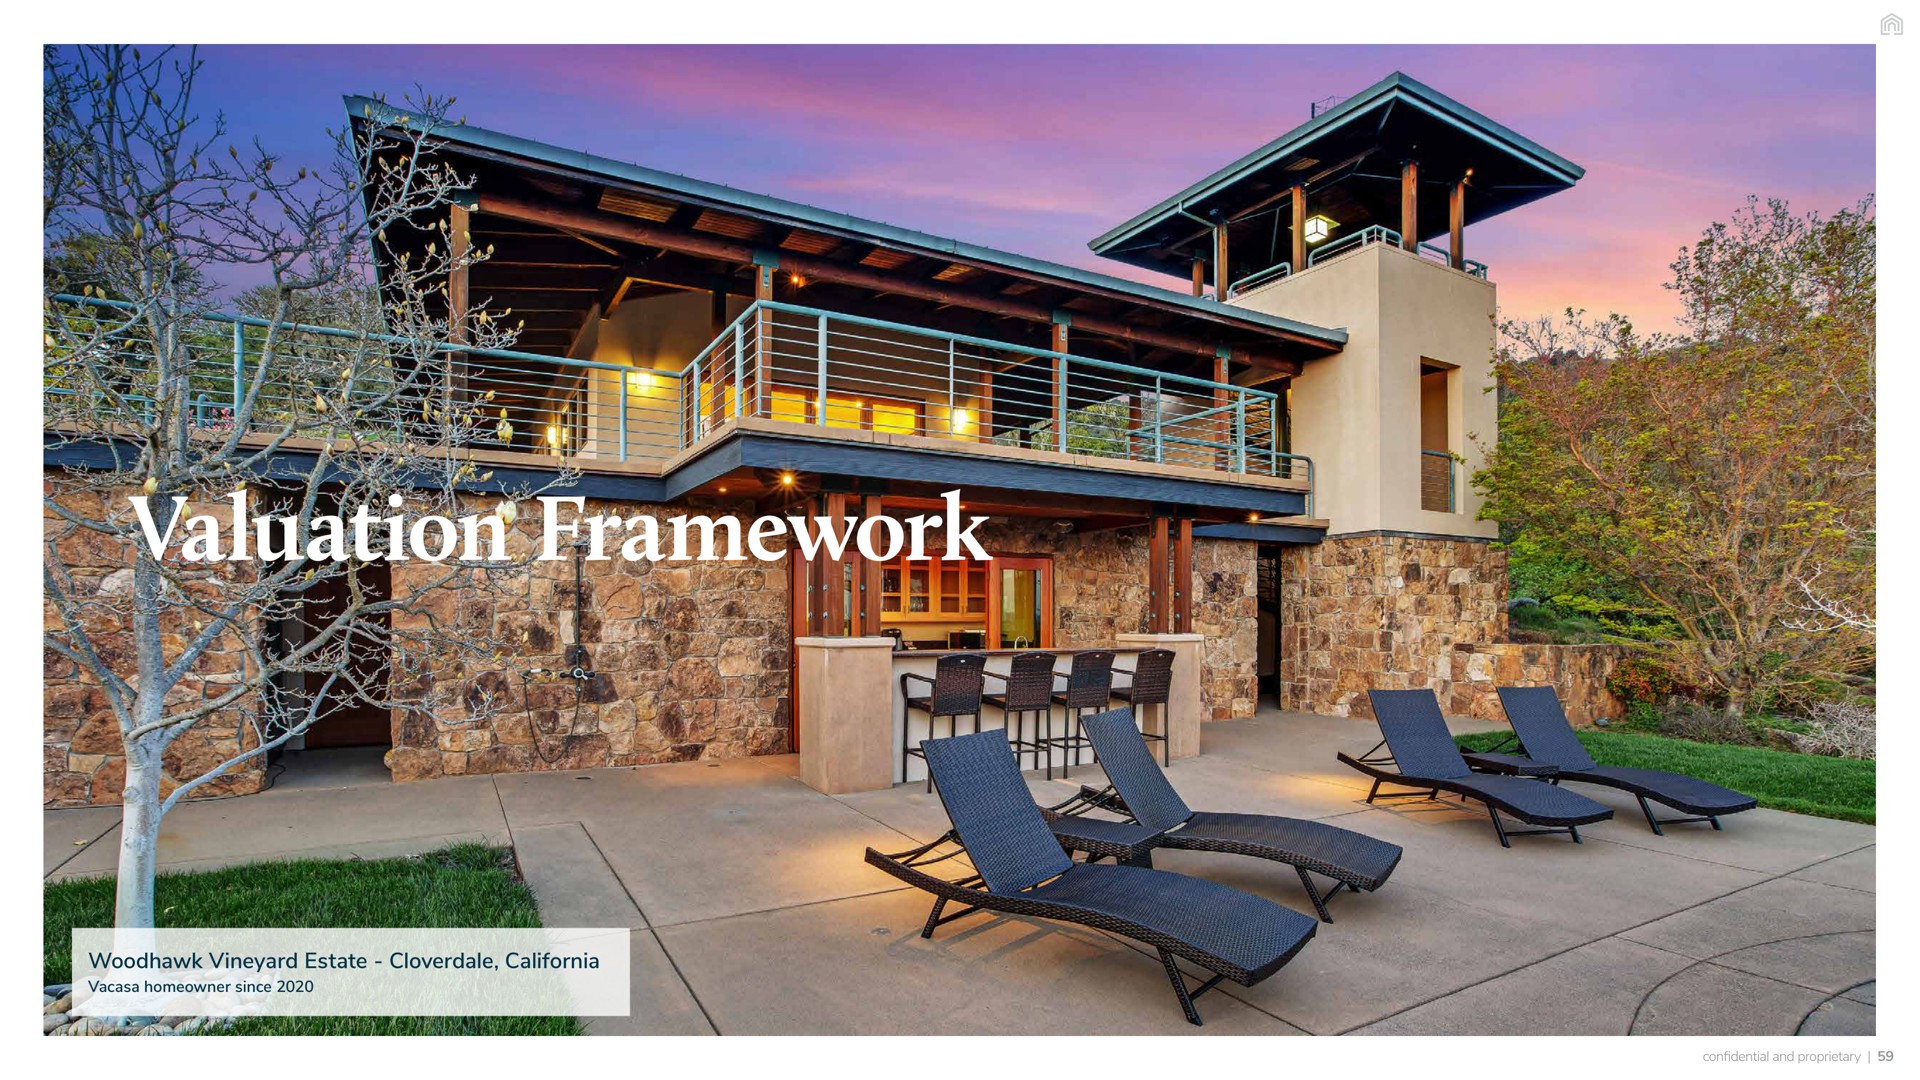 valuation framework homeowner since vineyard estate | Vacasa